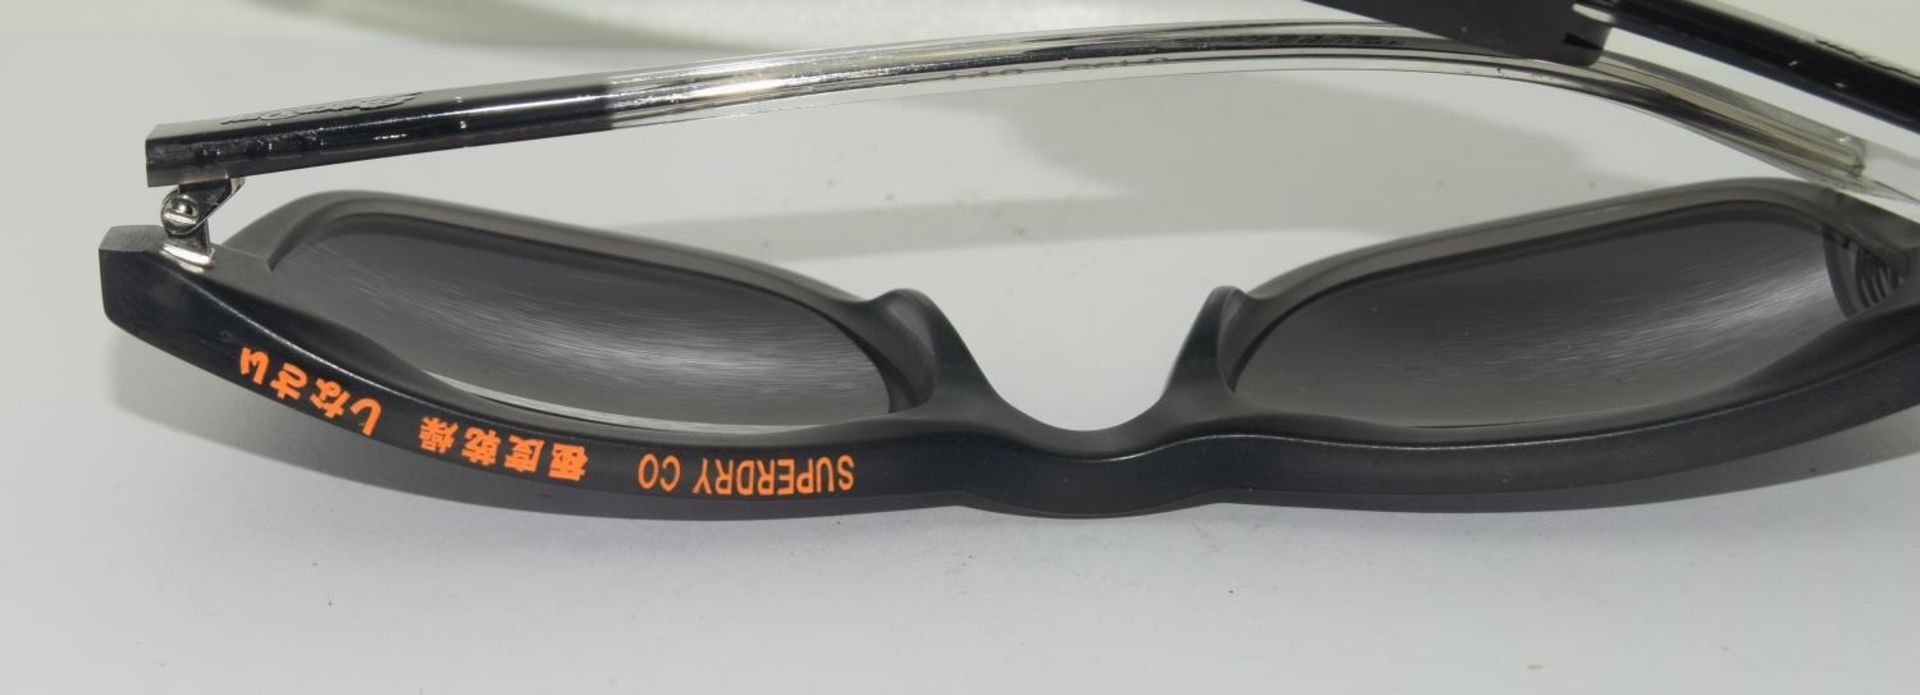 Pair of Superdry sunglasses BNWT (ref53) - Image 4 of 4